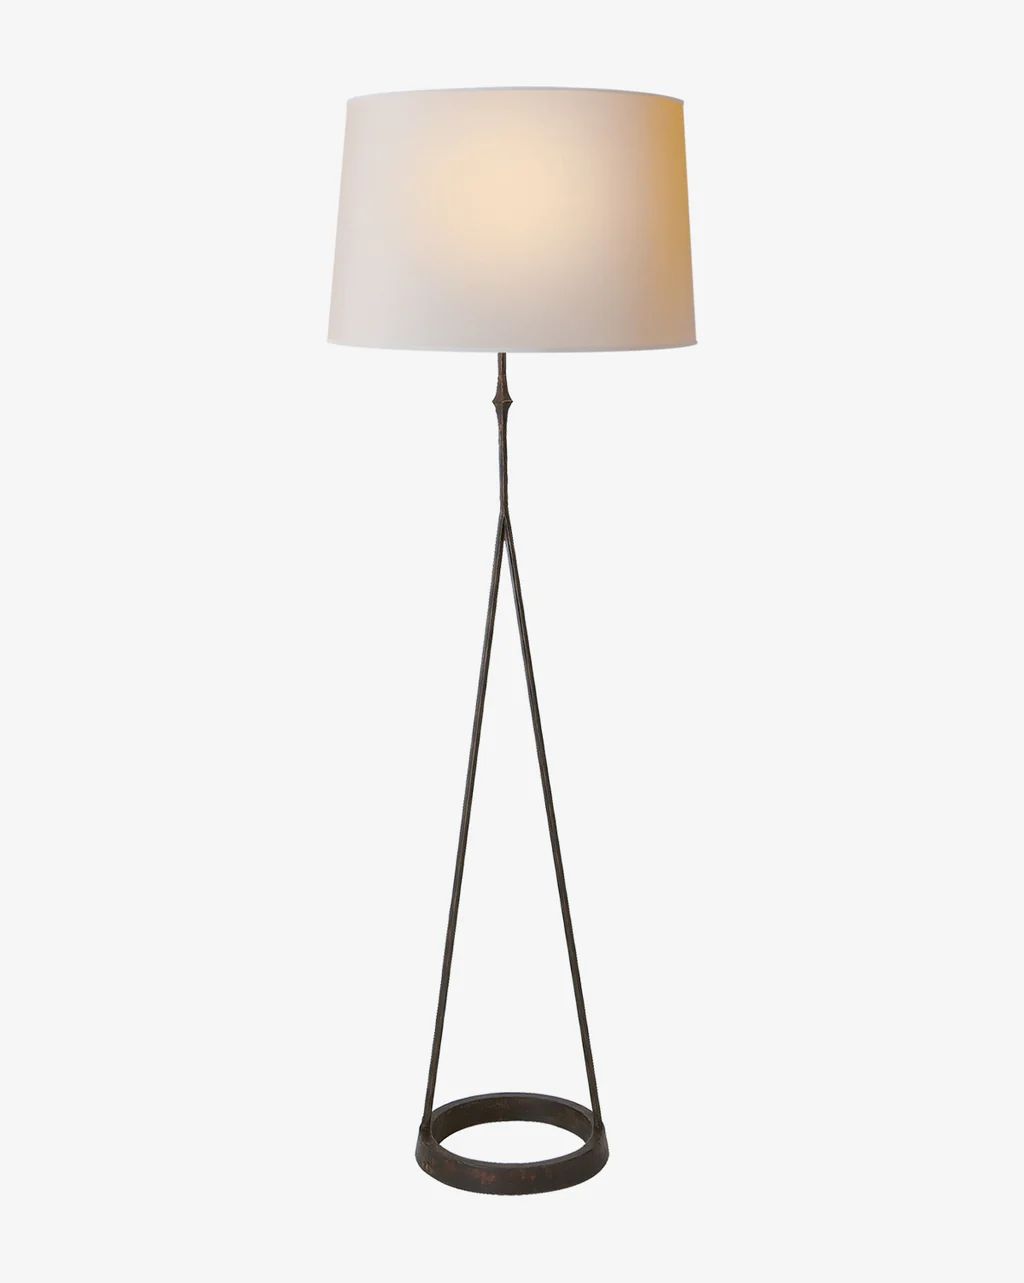 Dauphine Floor Lamp | McGee & Co.